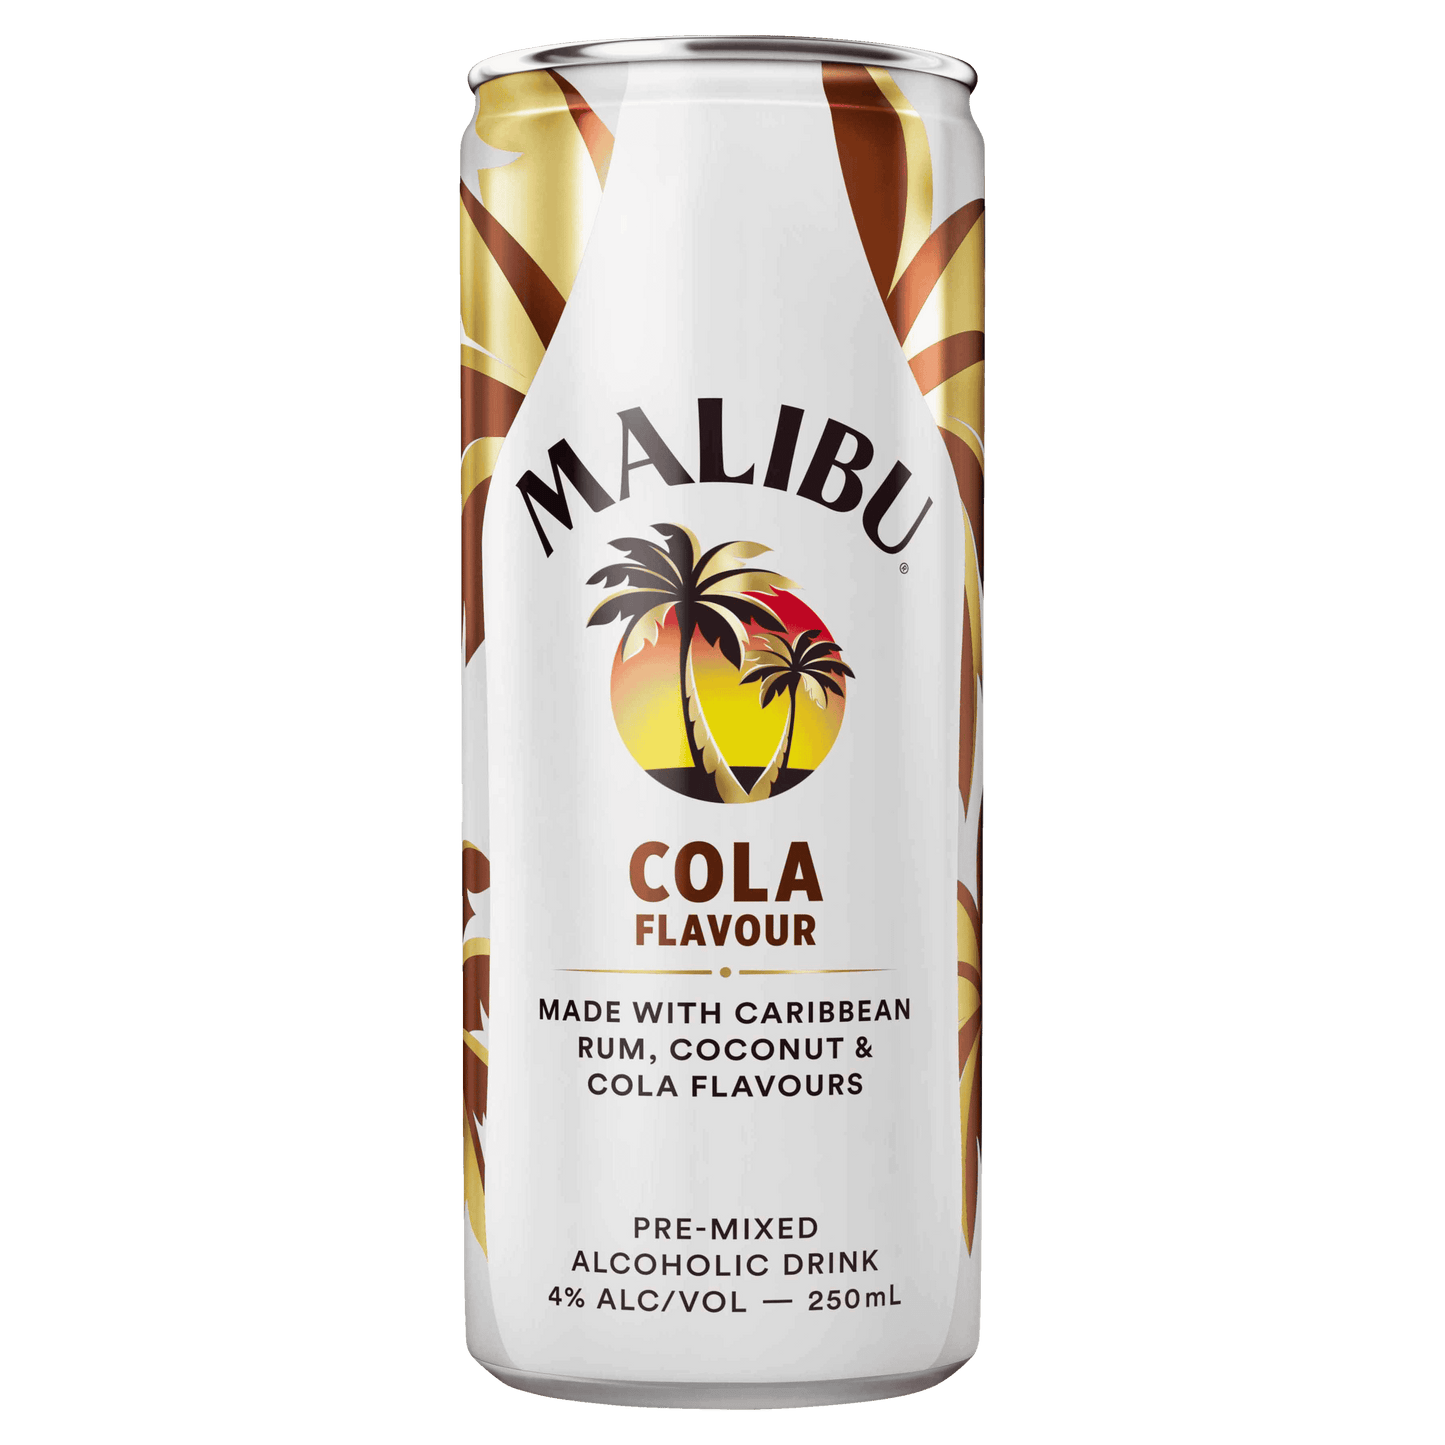 Malibu & Cola Cans